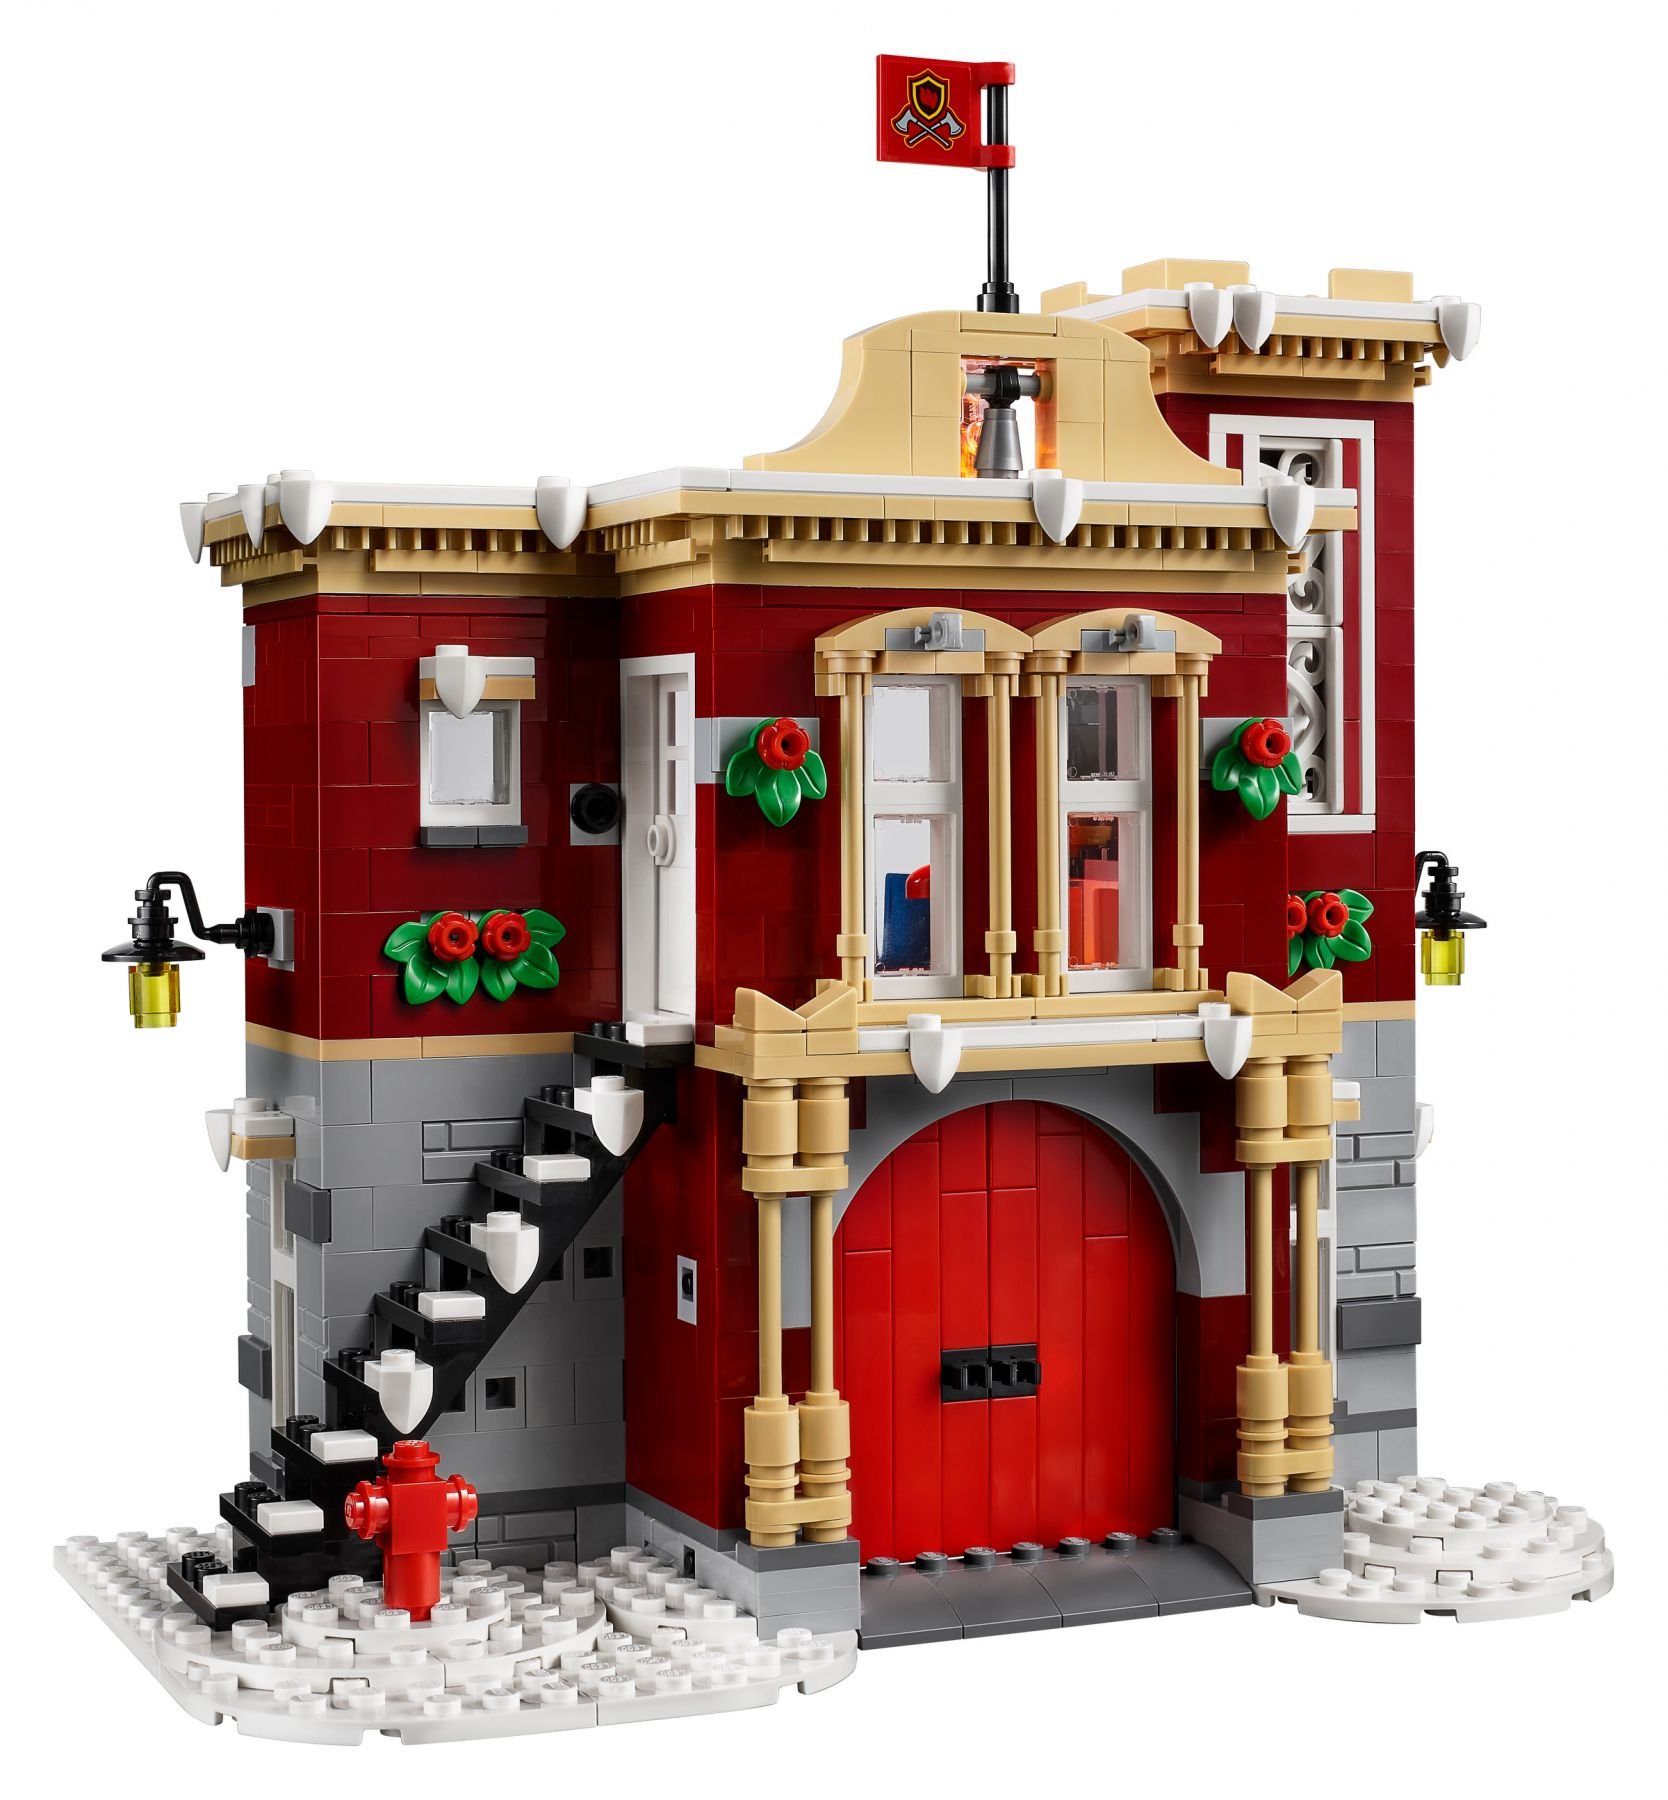 LEGO Advanced Models 10263 Winterliche Feuerwehrstation LEGO_10263_alt2.jpg